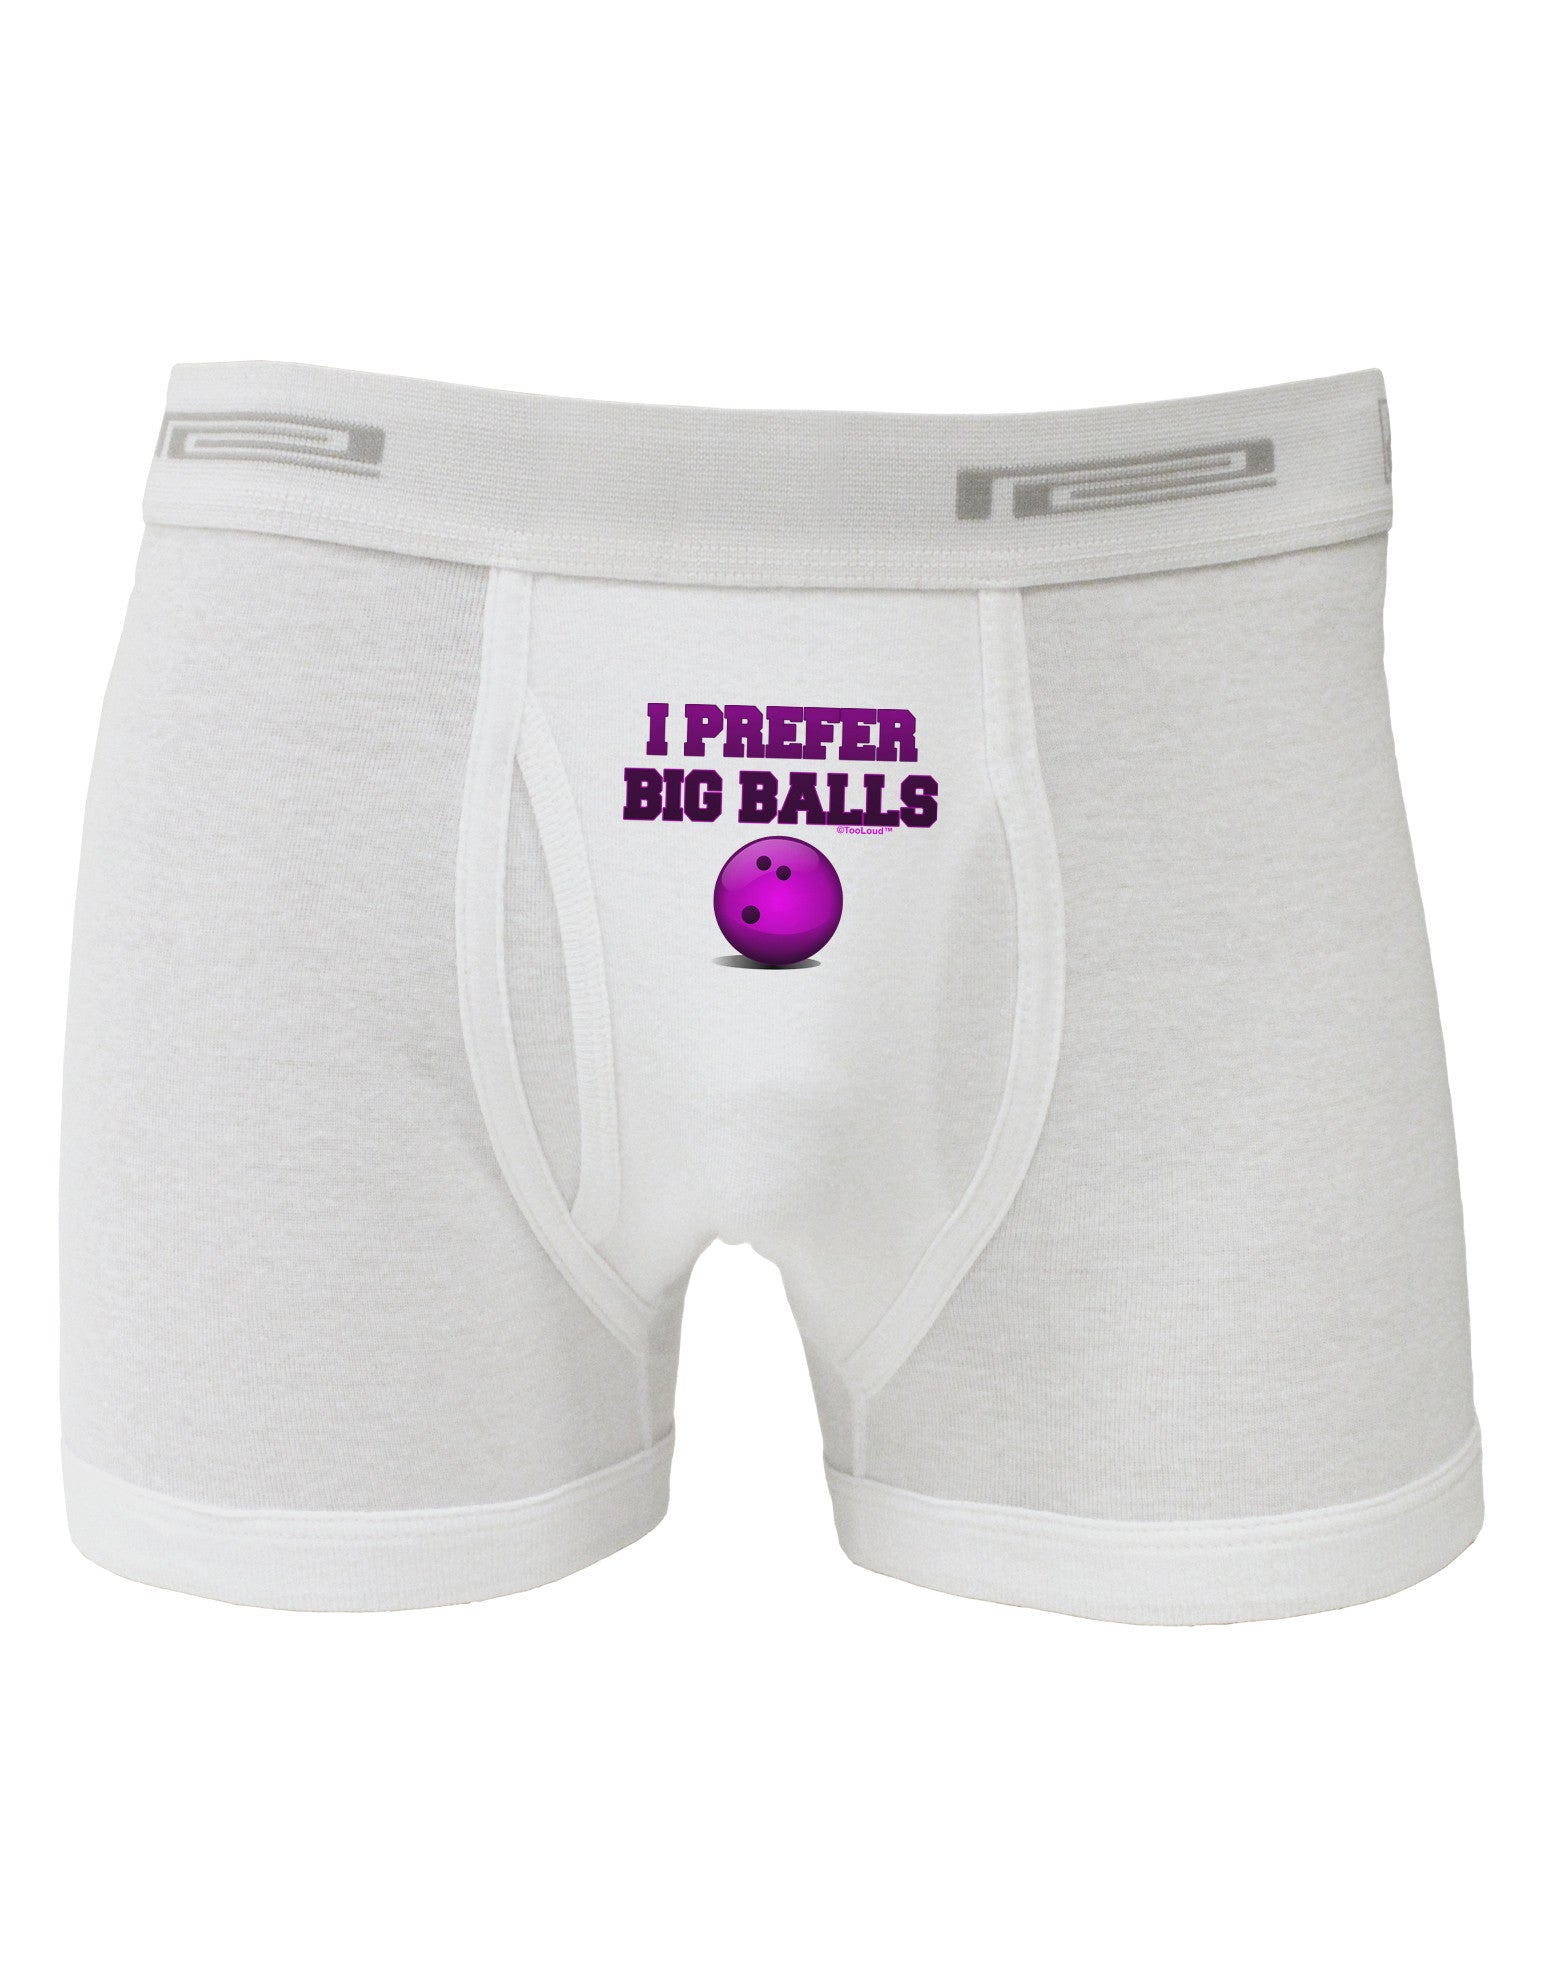 christine calamia add underwear for men with big balls photo